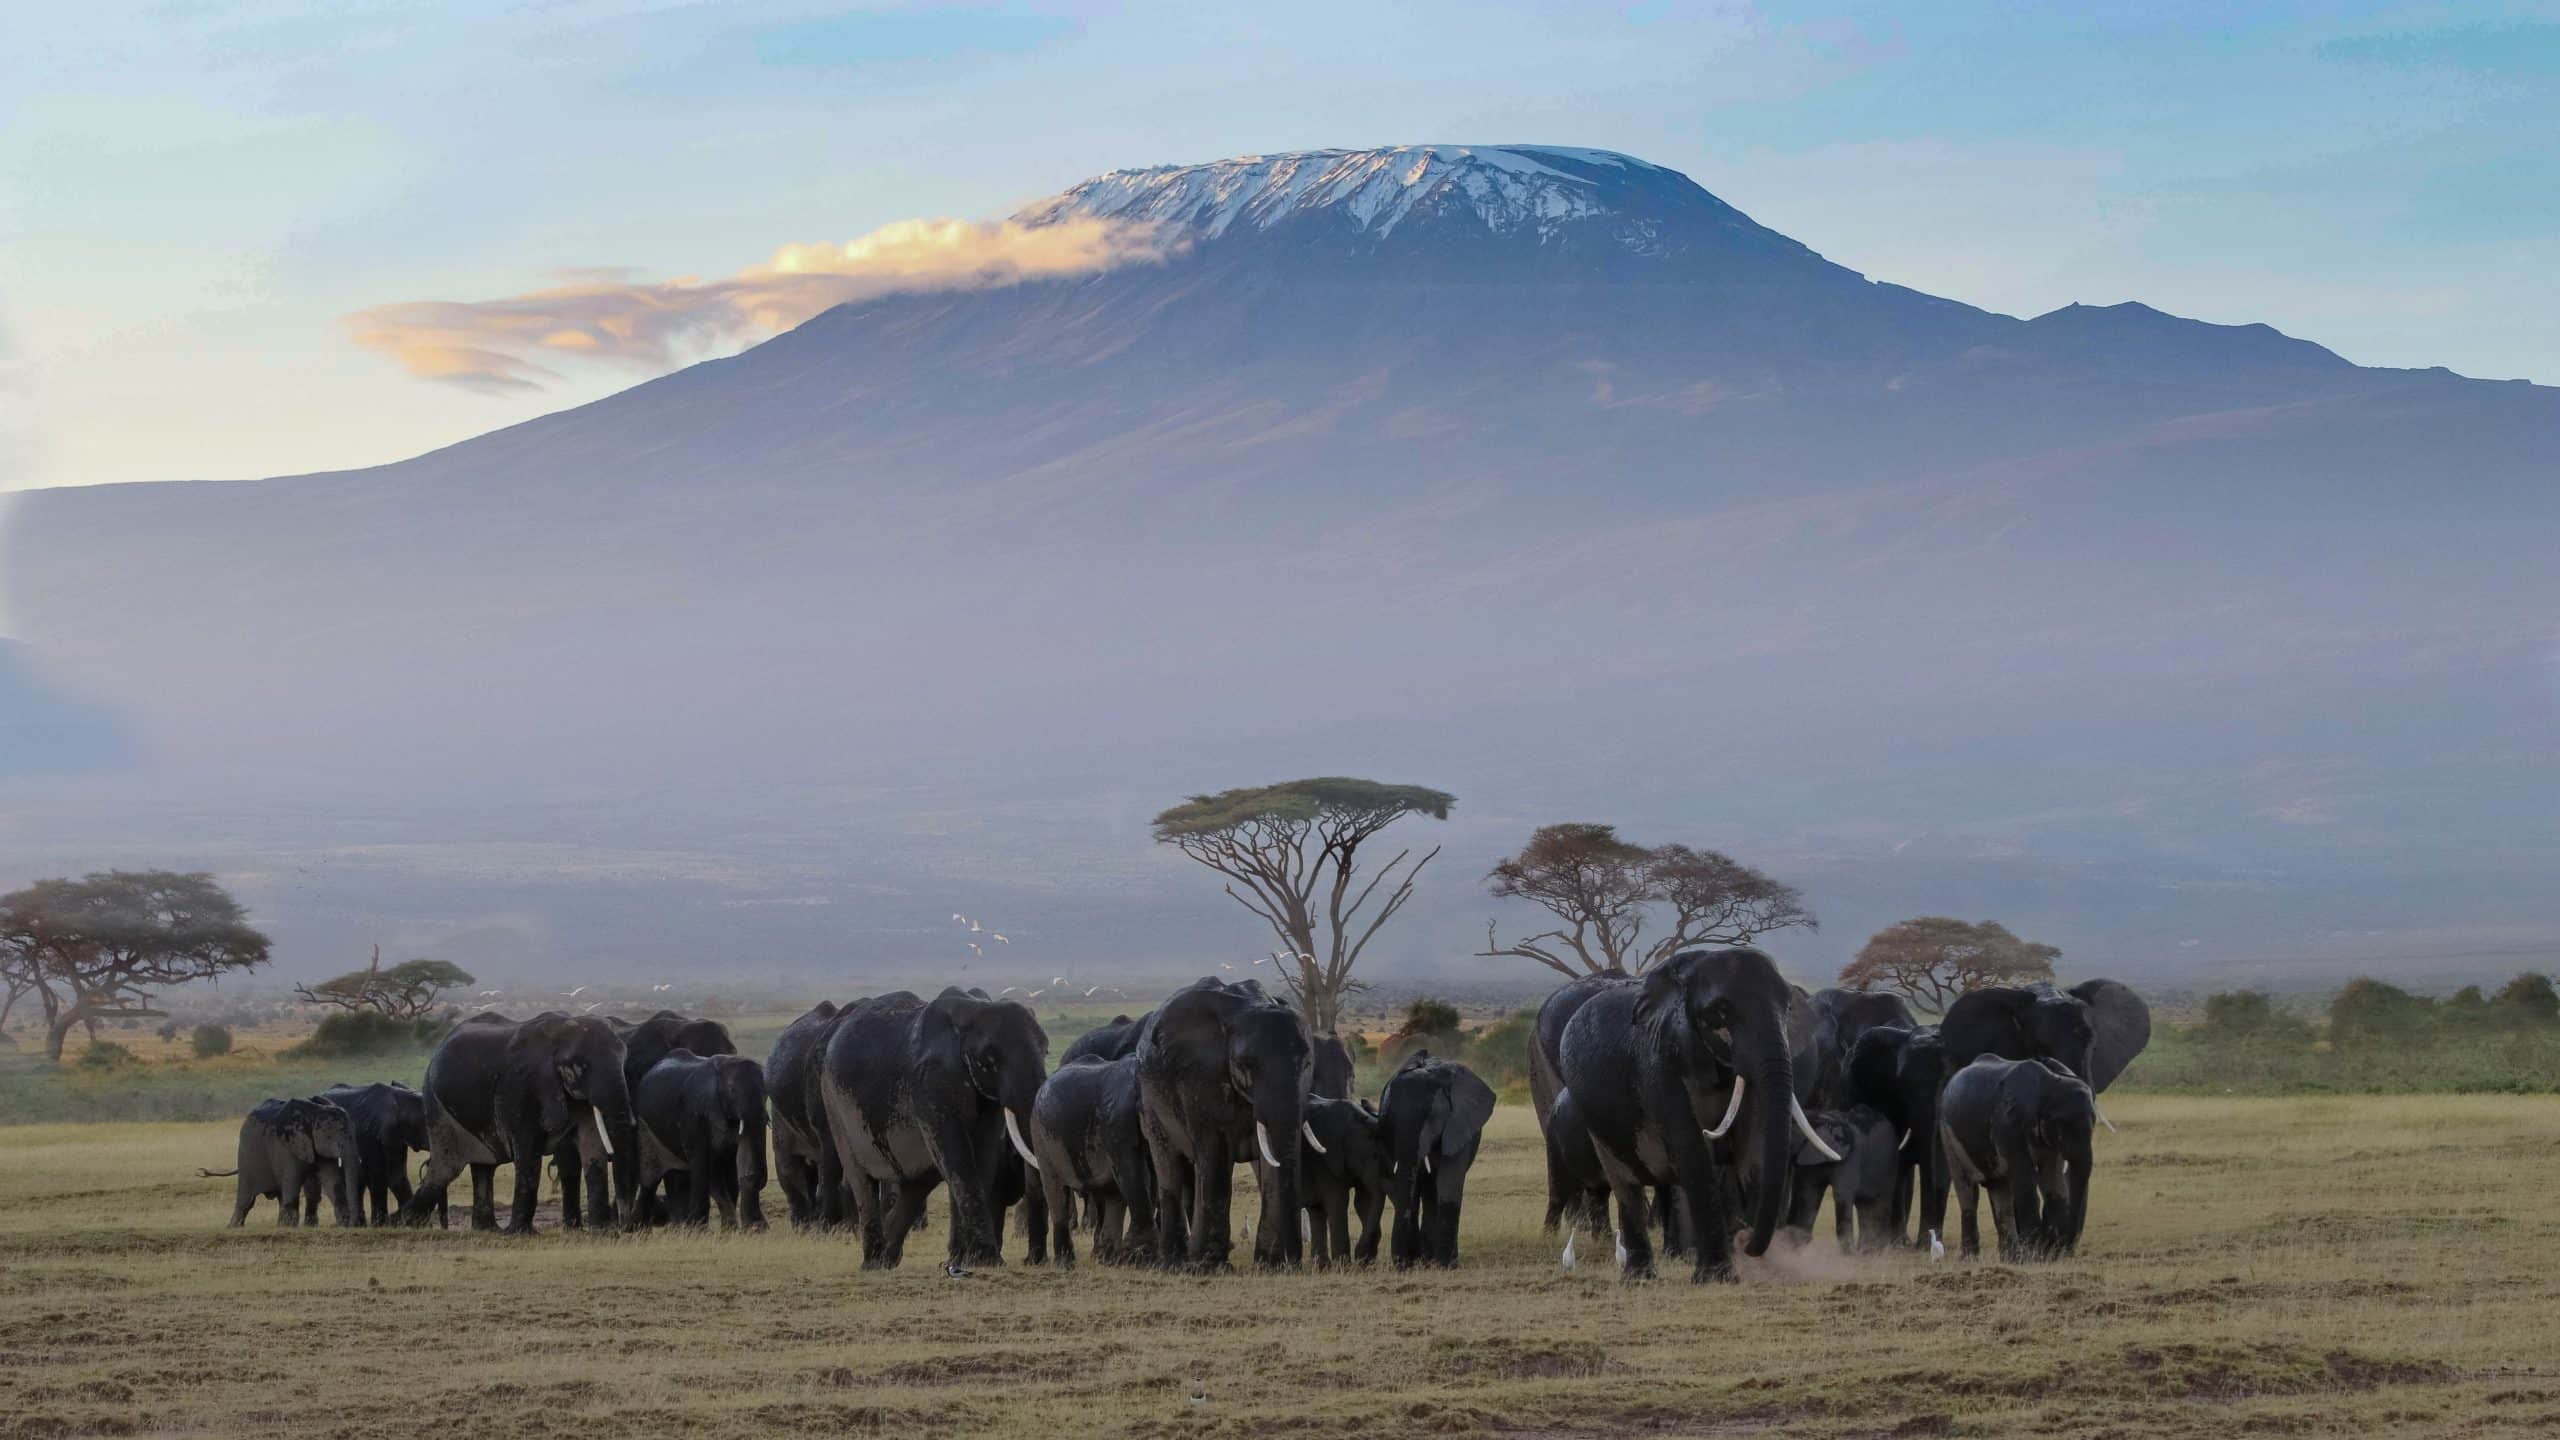 Bucket list must sees in Africa: Mount Kilimanjaro - Tanzania